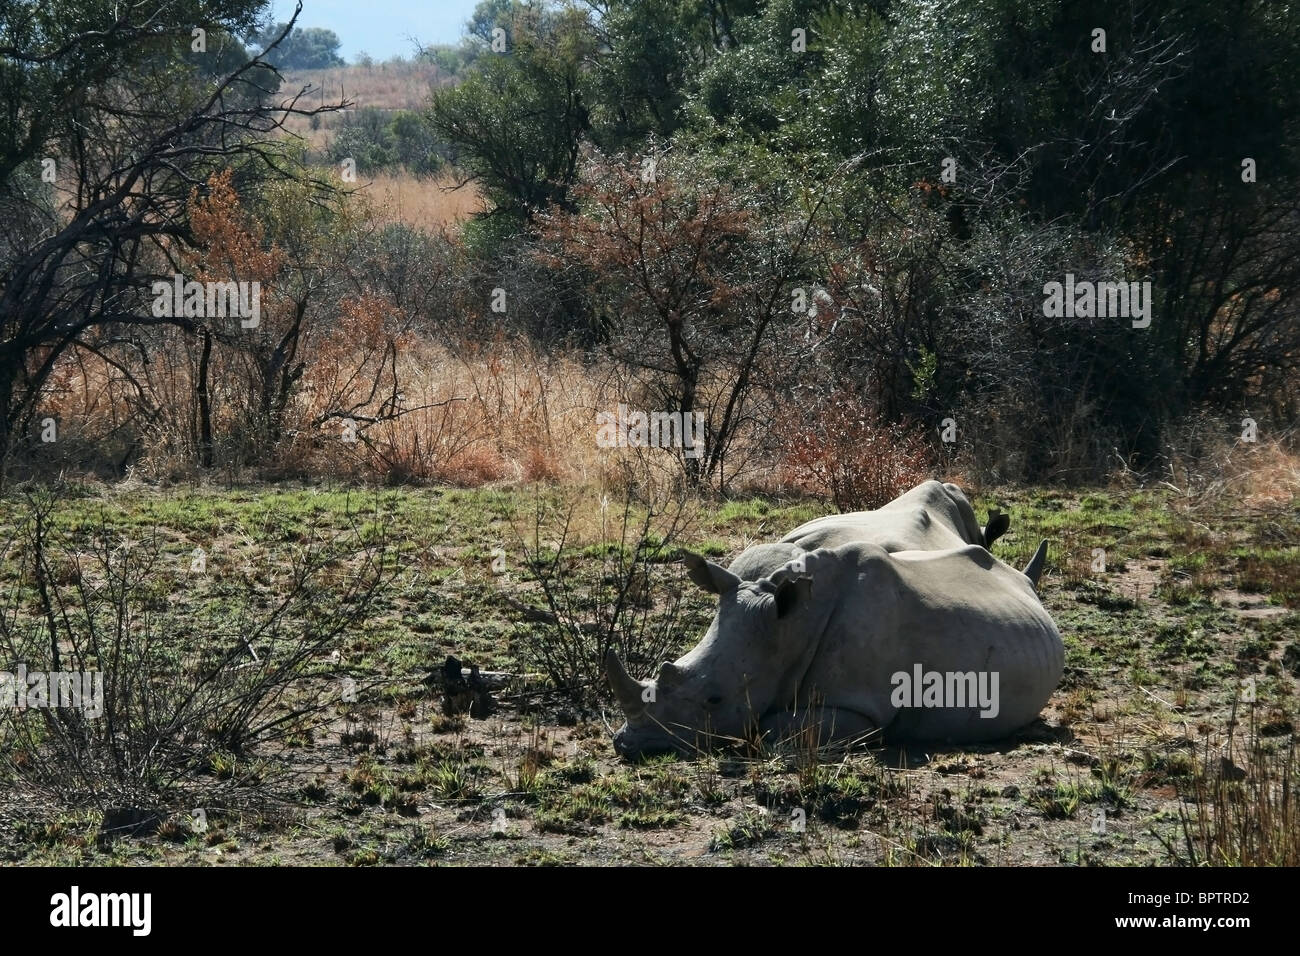 Rhinoceros in the South African safari park Stock Photo